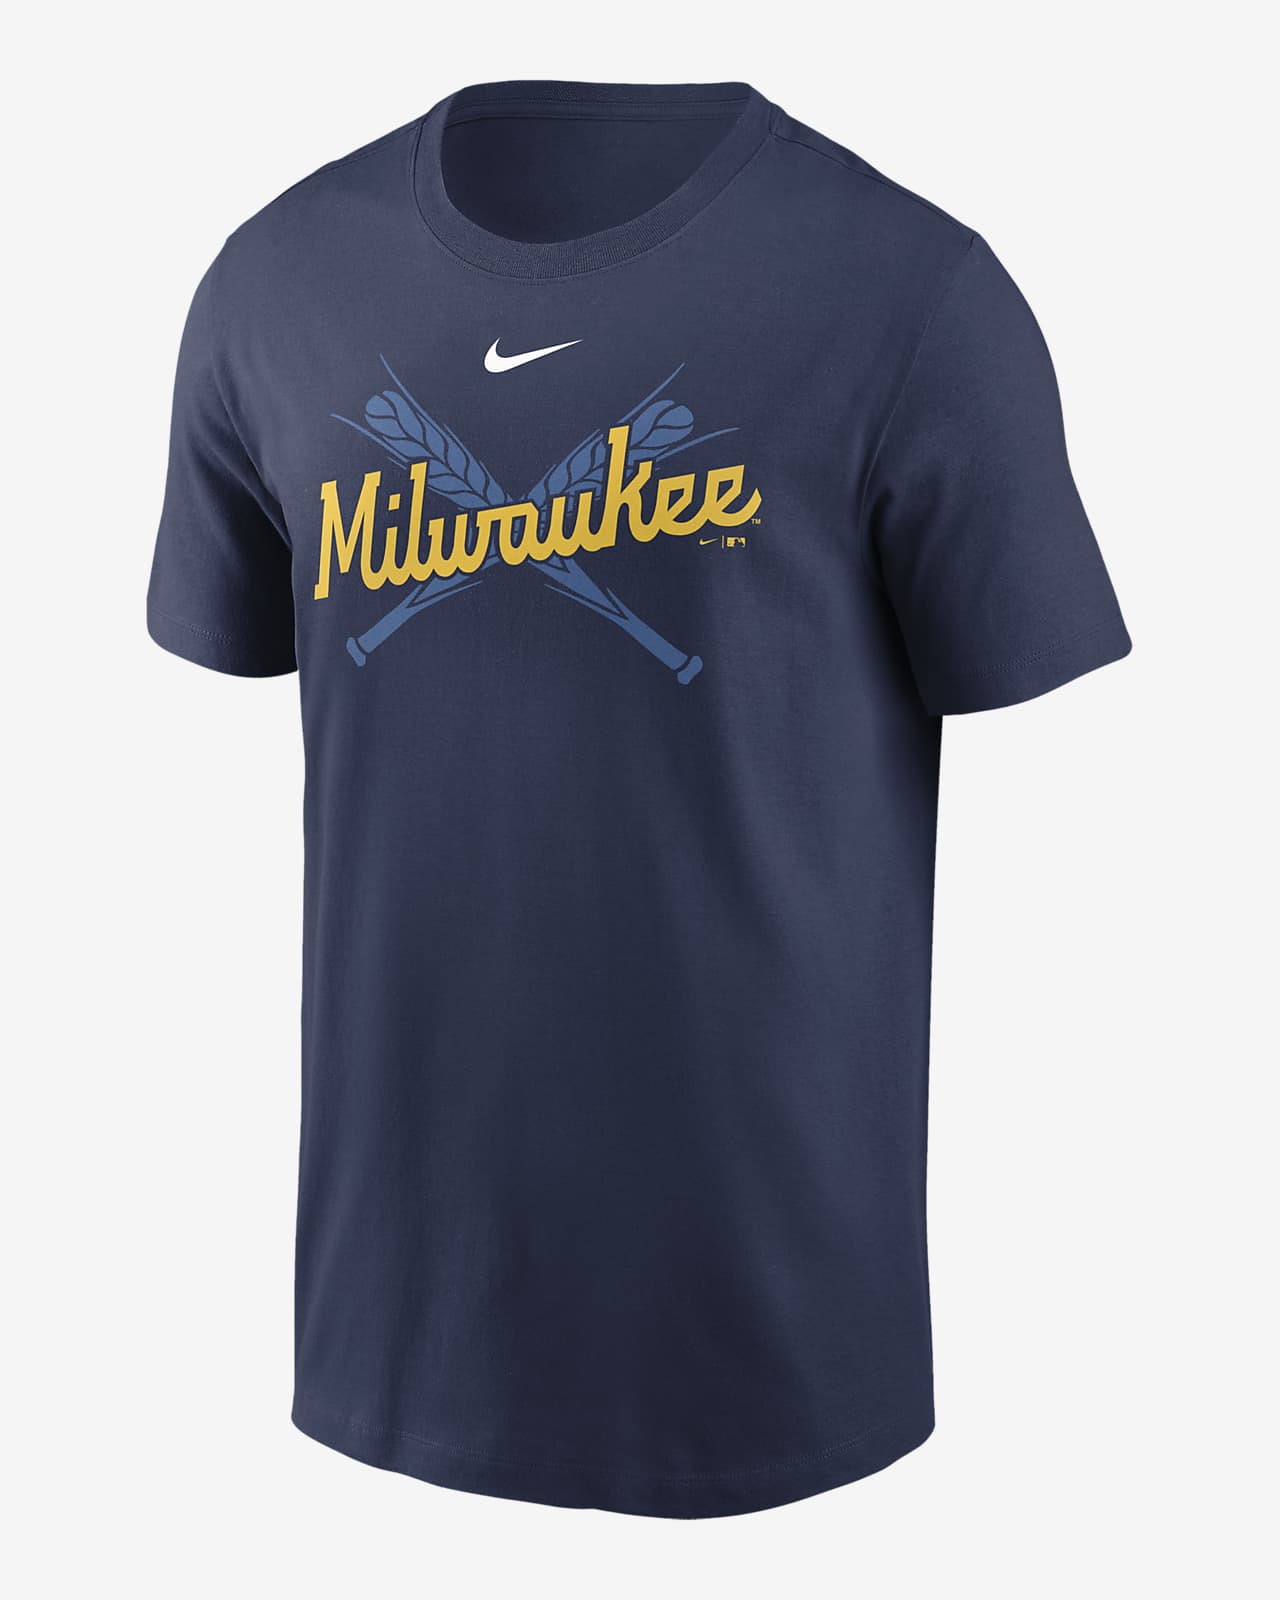 Playera para hombre Nike Local (MLB Milwaukee Brewers)